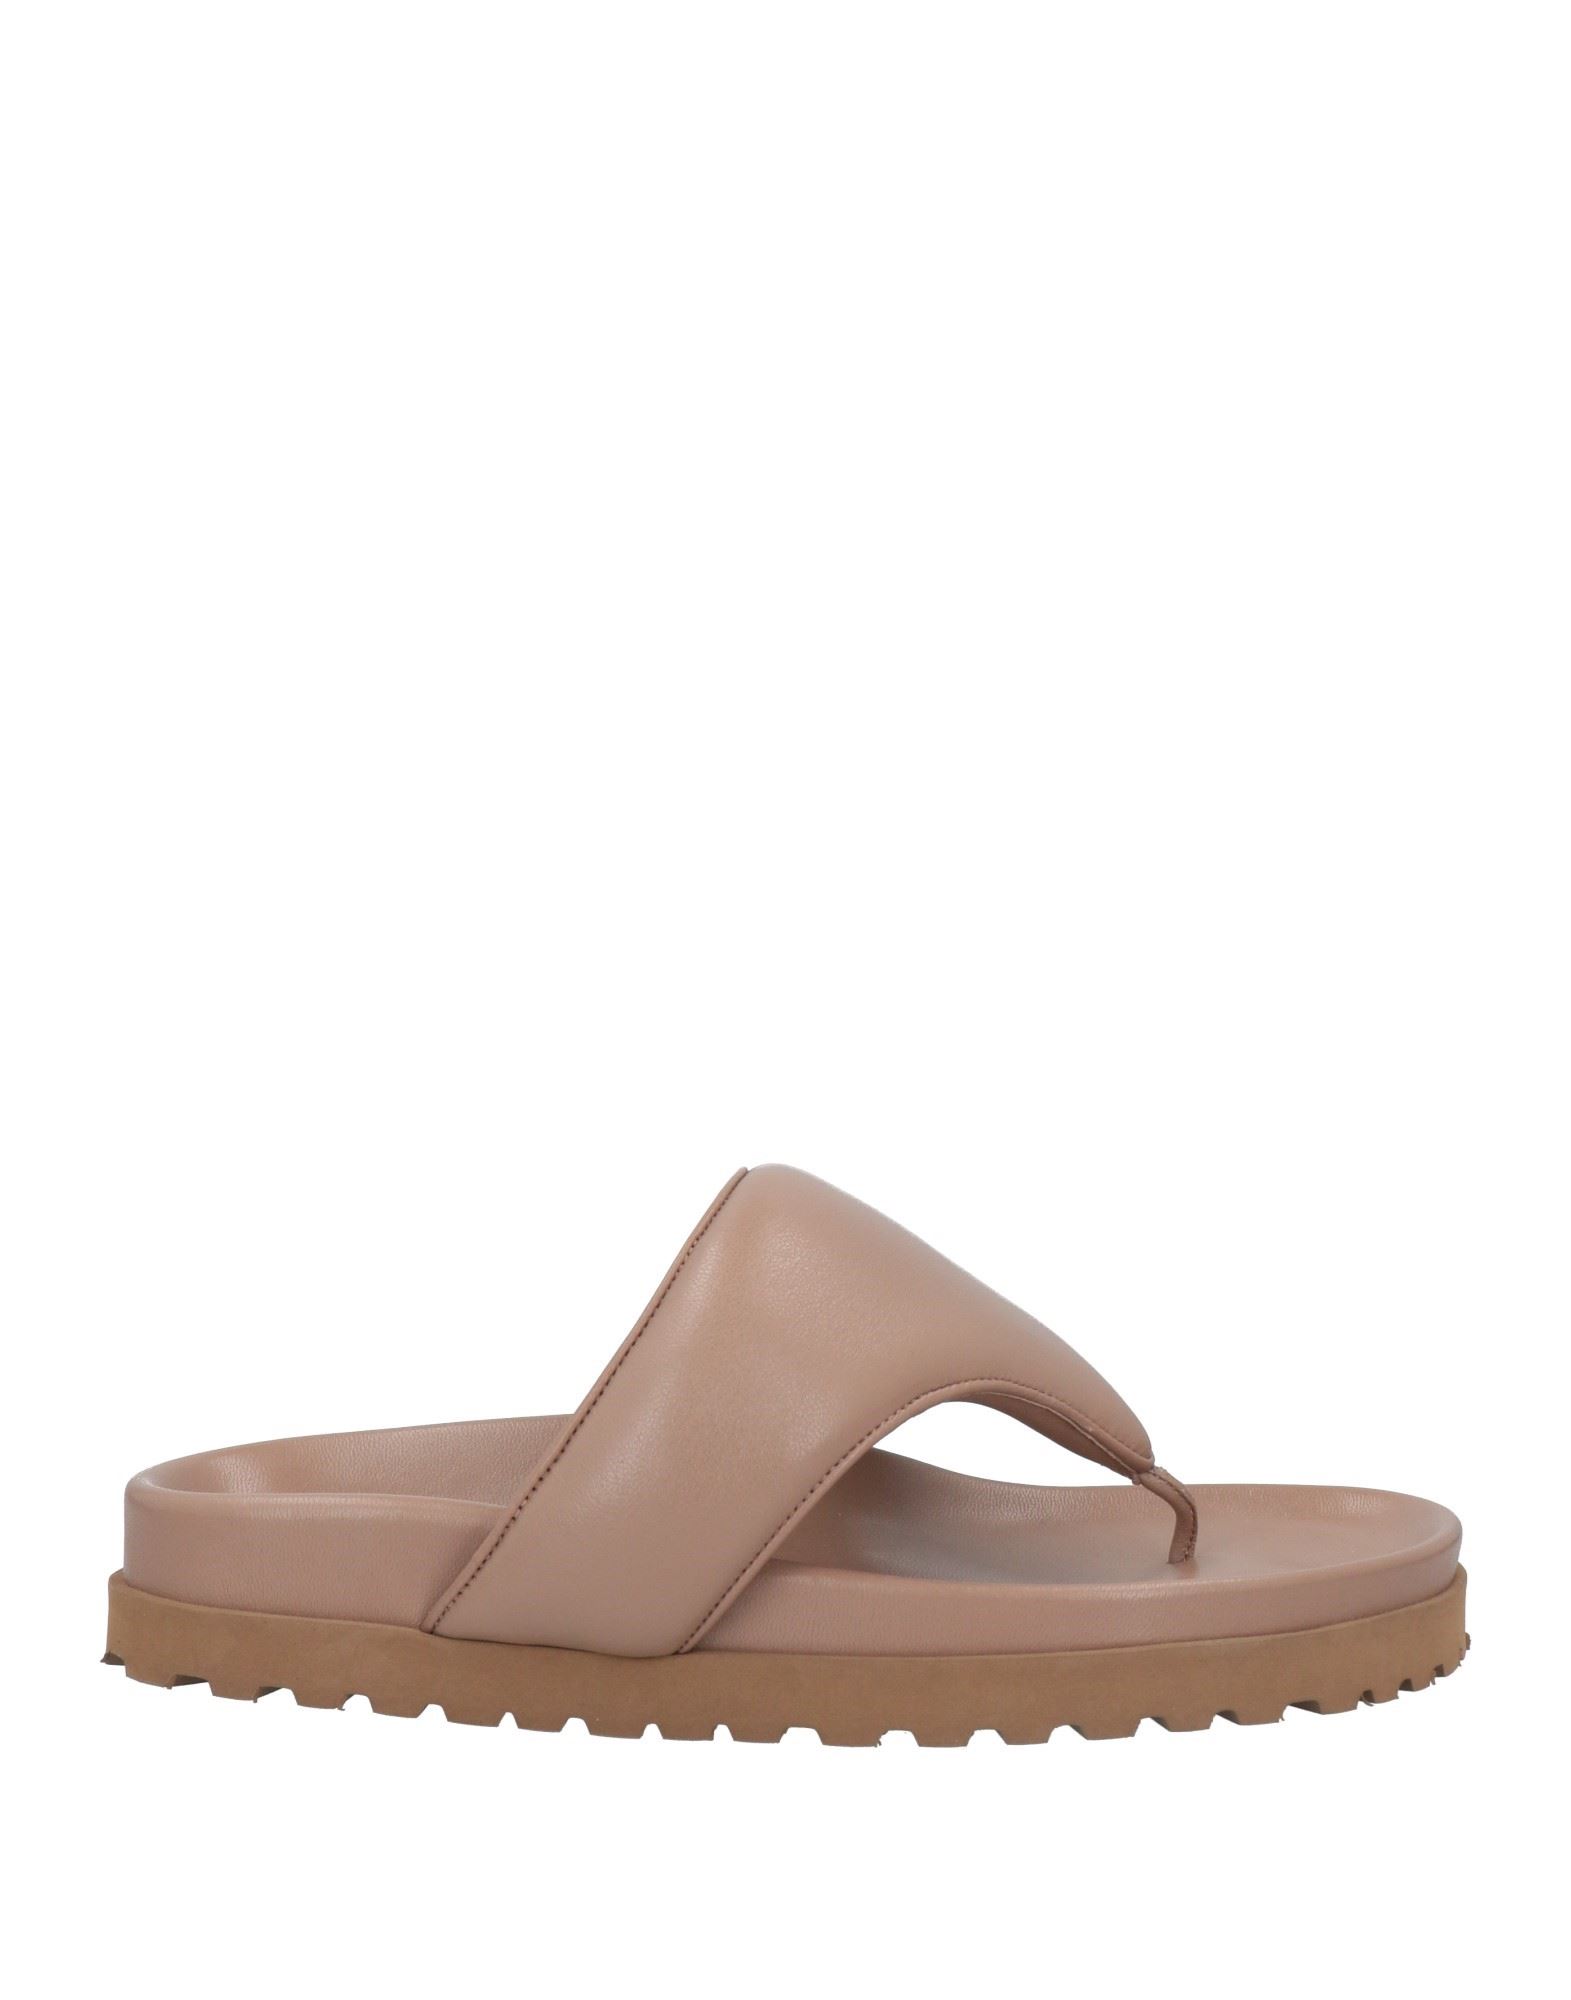 Gia X Pernille Teisbaek Toe Strap Sandals In Light Brown